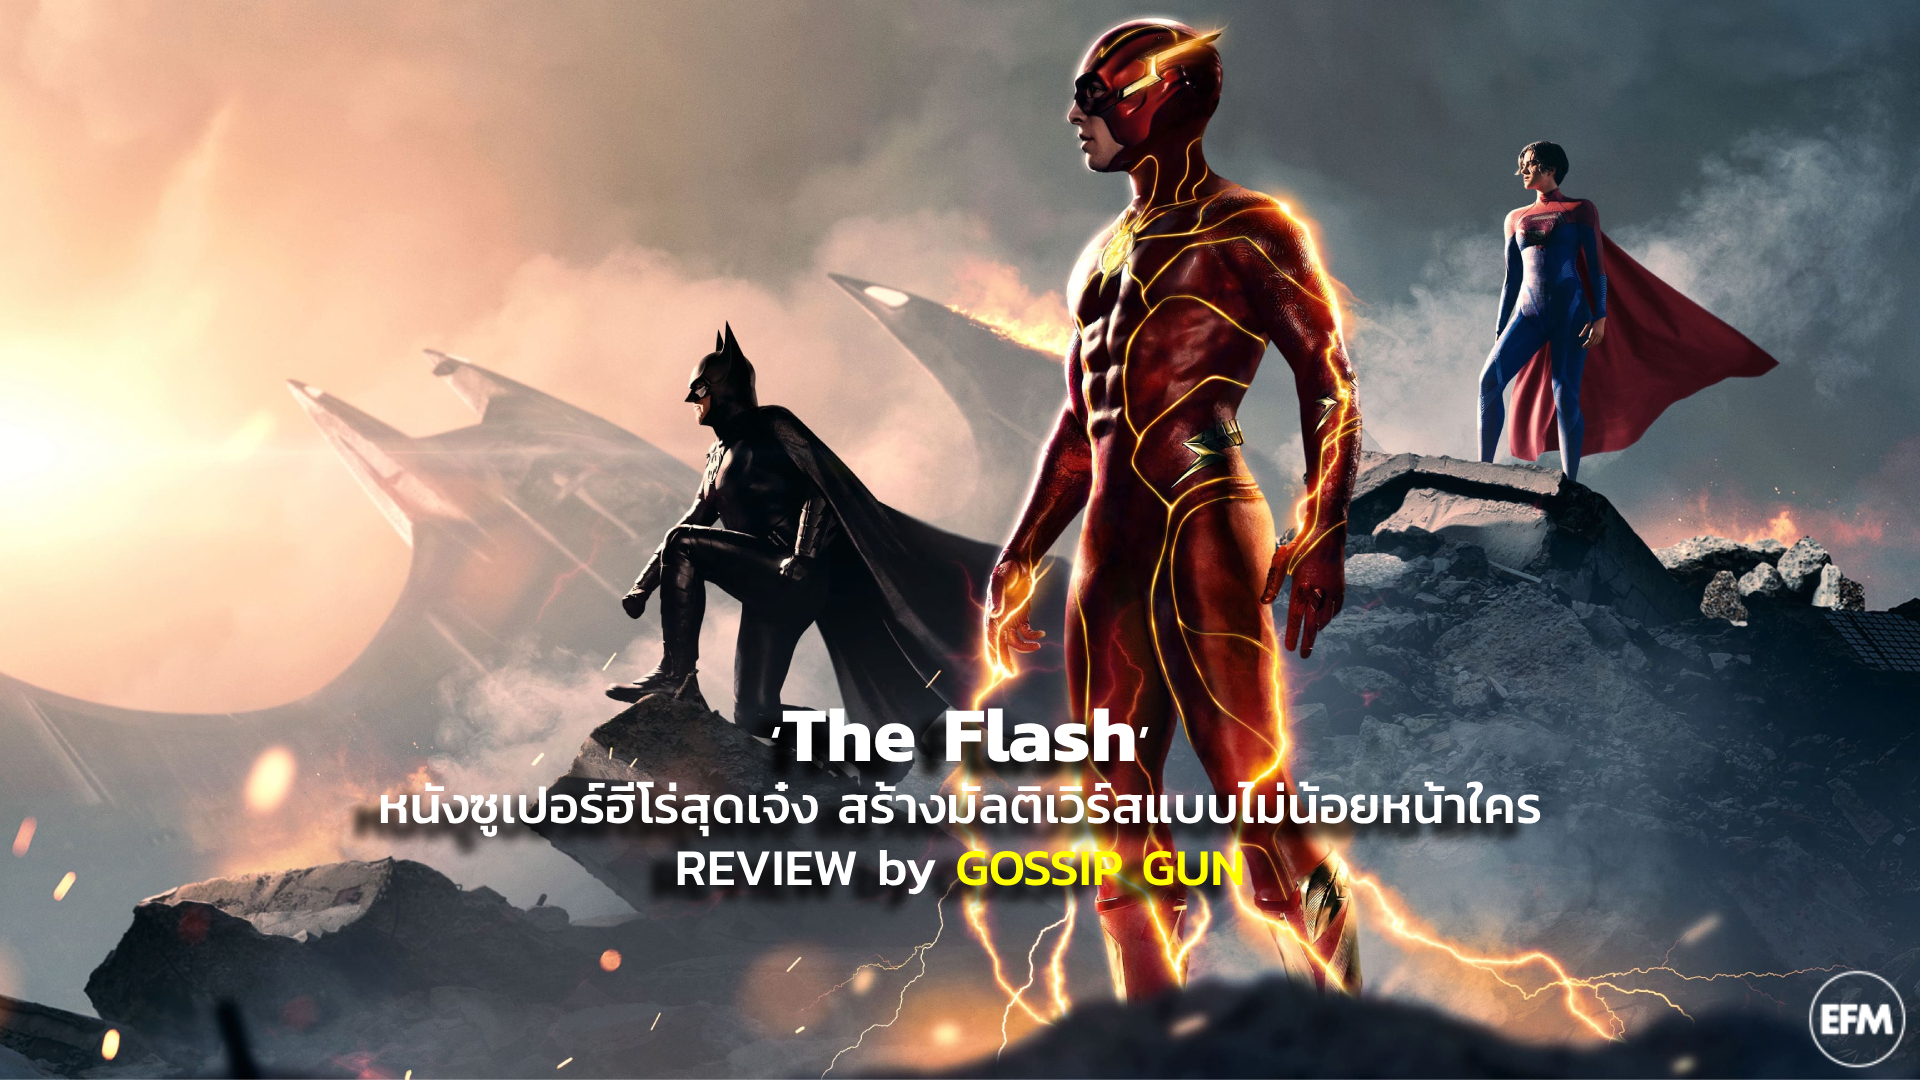 [REVIEW] ‘The Flash’ หนังซูเปอร์ฮีโร่สุดเจ๋ง สร้างมัลติเวิร์สแบบไม่น้อยหน้าใคร | GOSSIP GUN